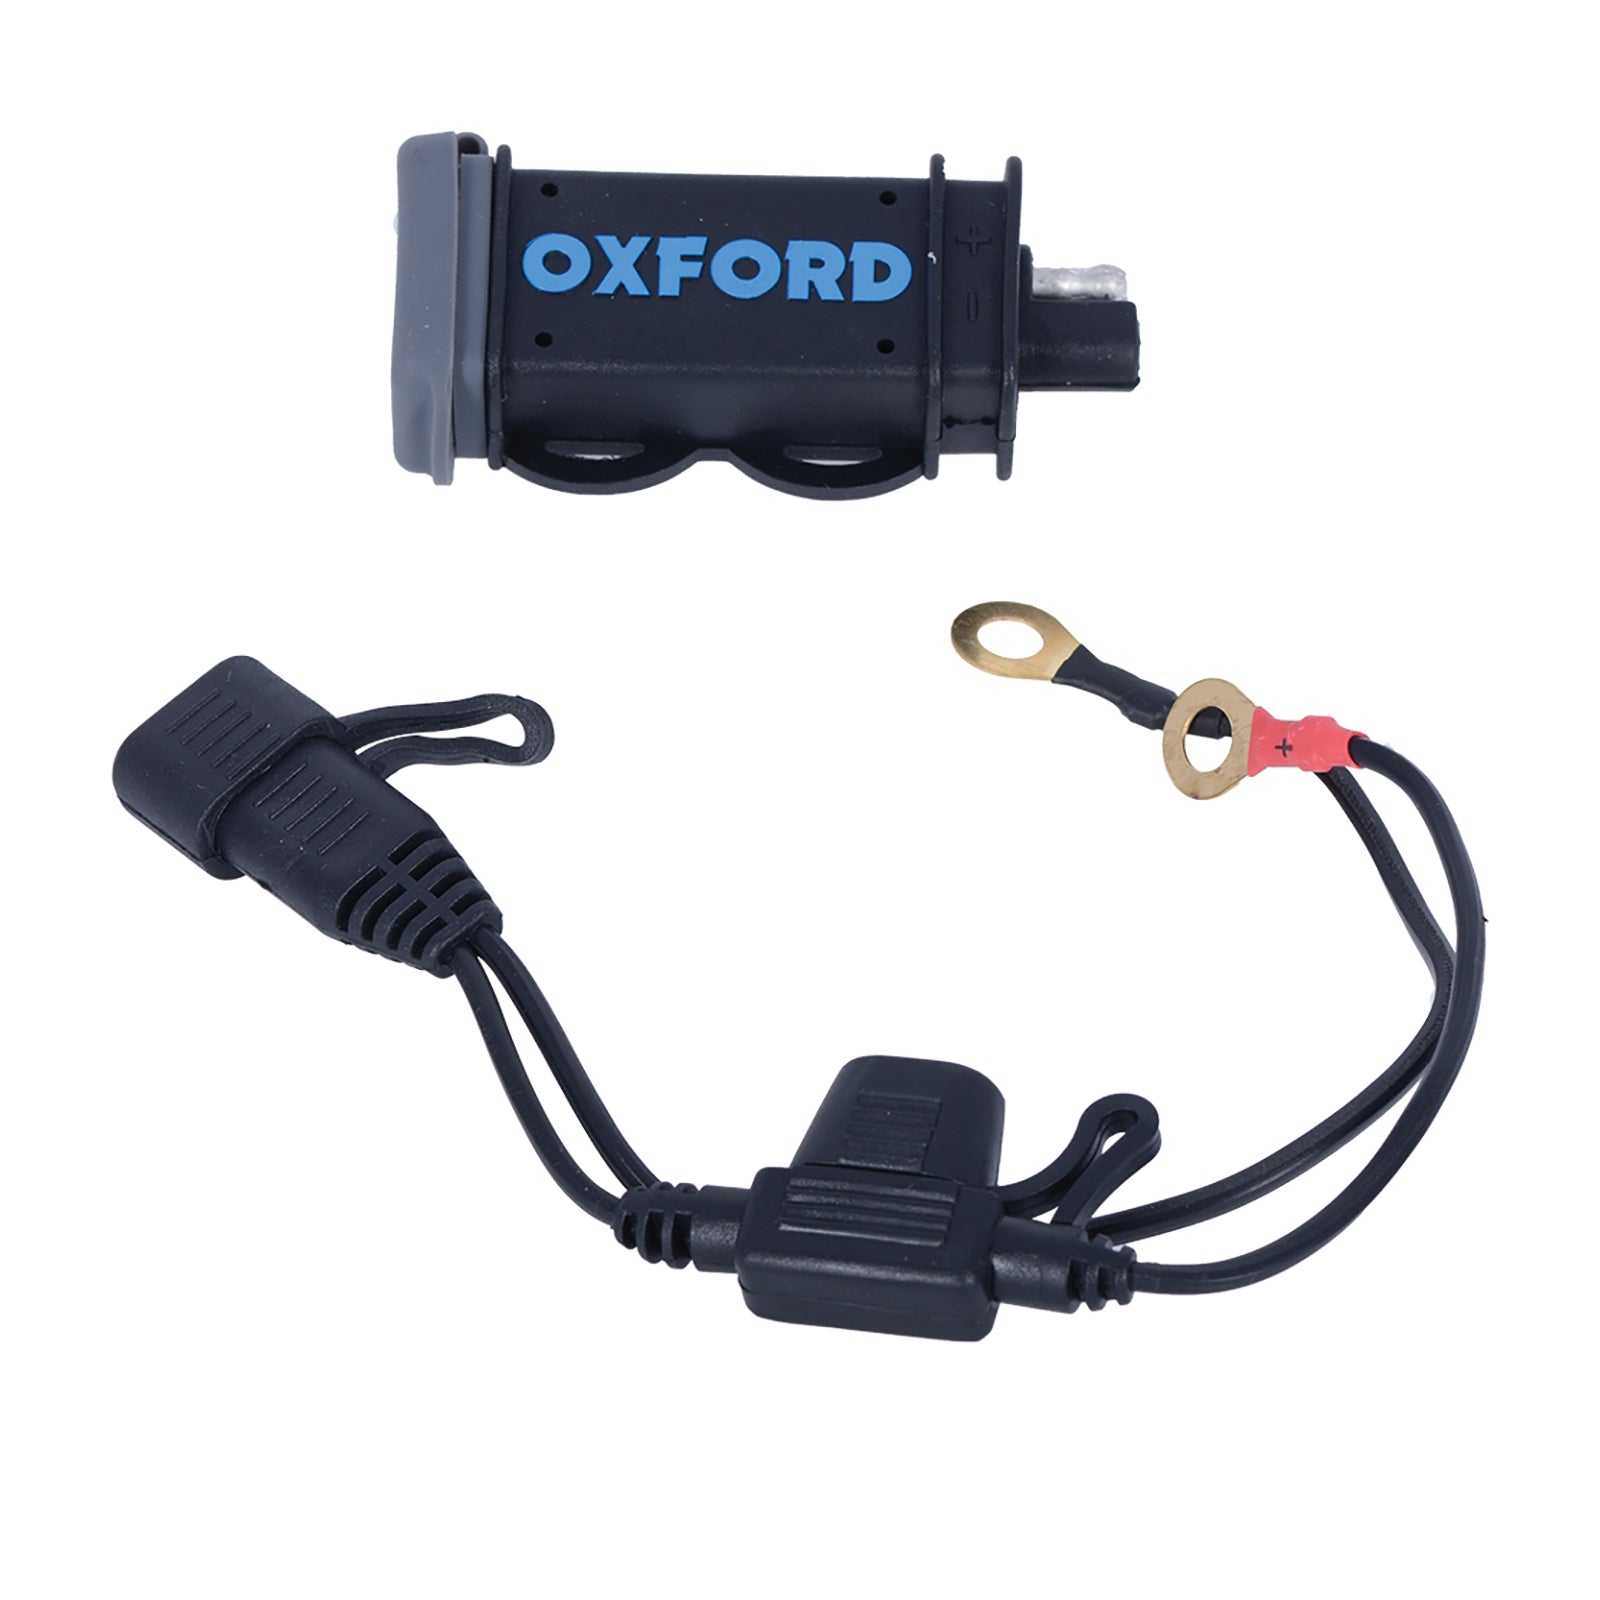 Oxford, OXFORD USB 2.1AMP HIGH POWER CHARGING KIT